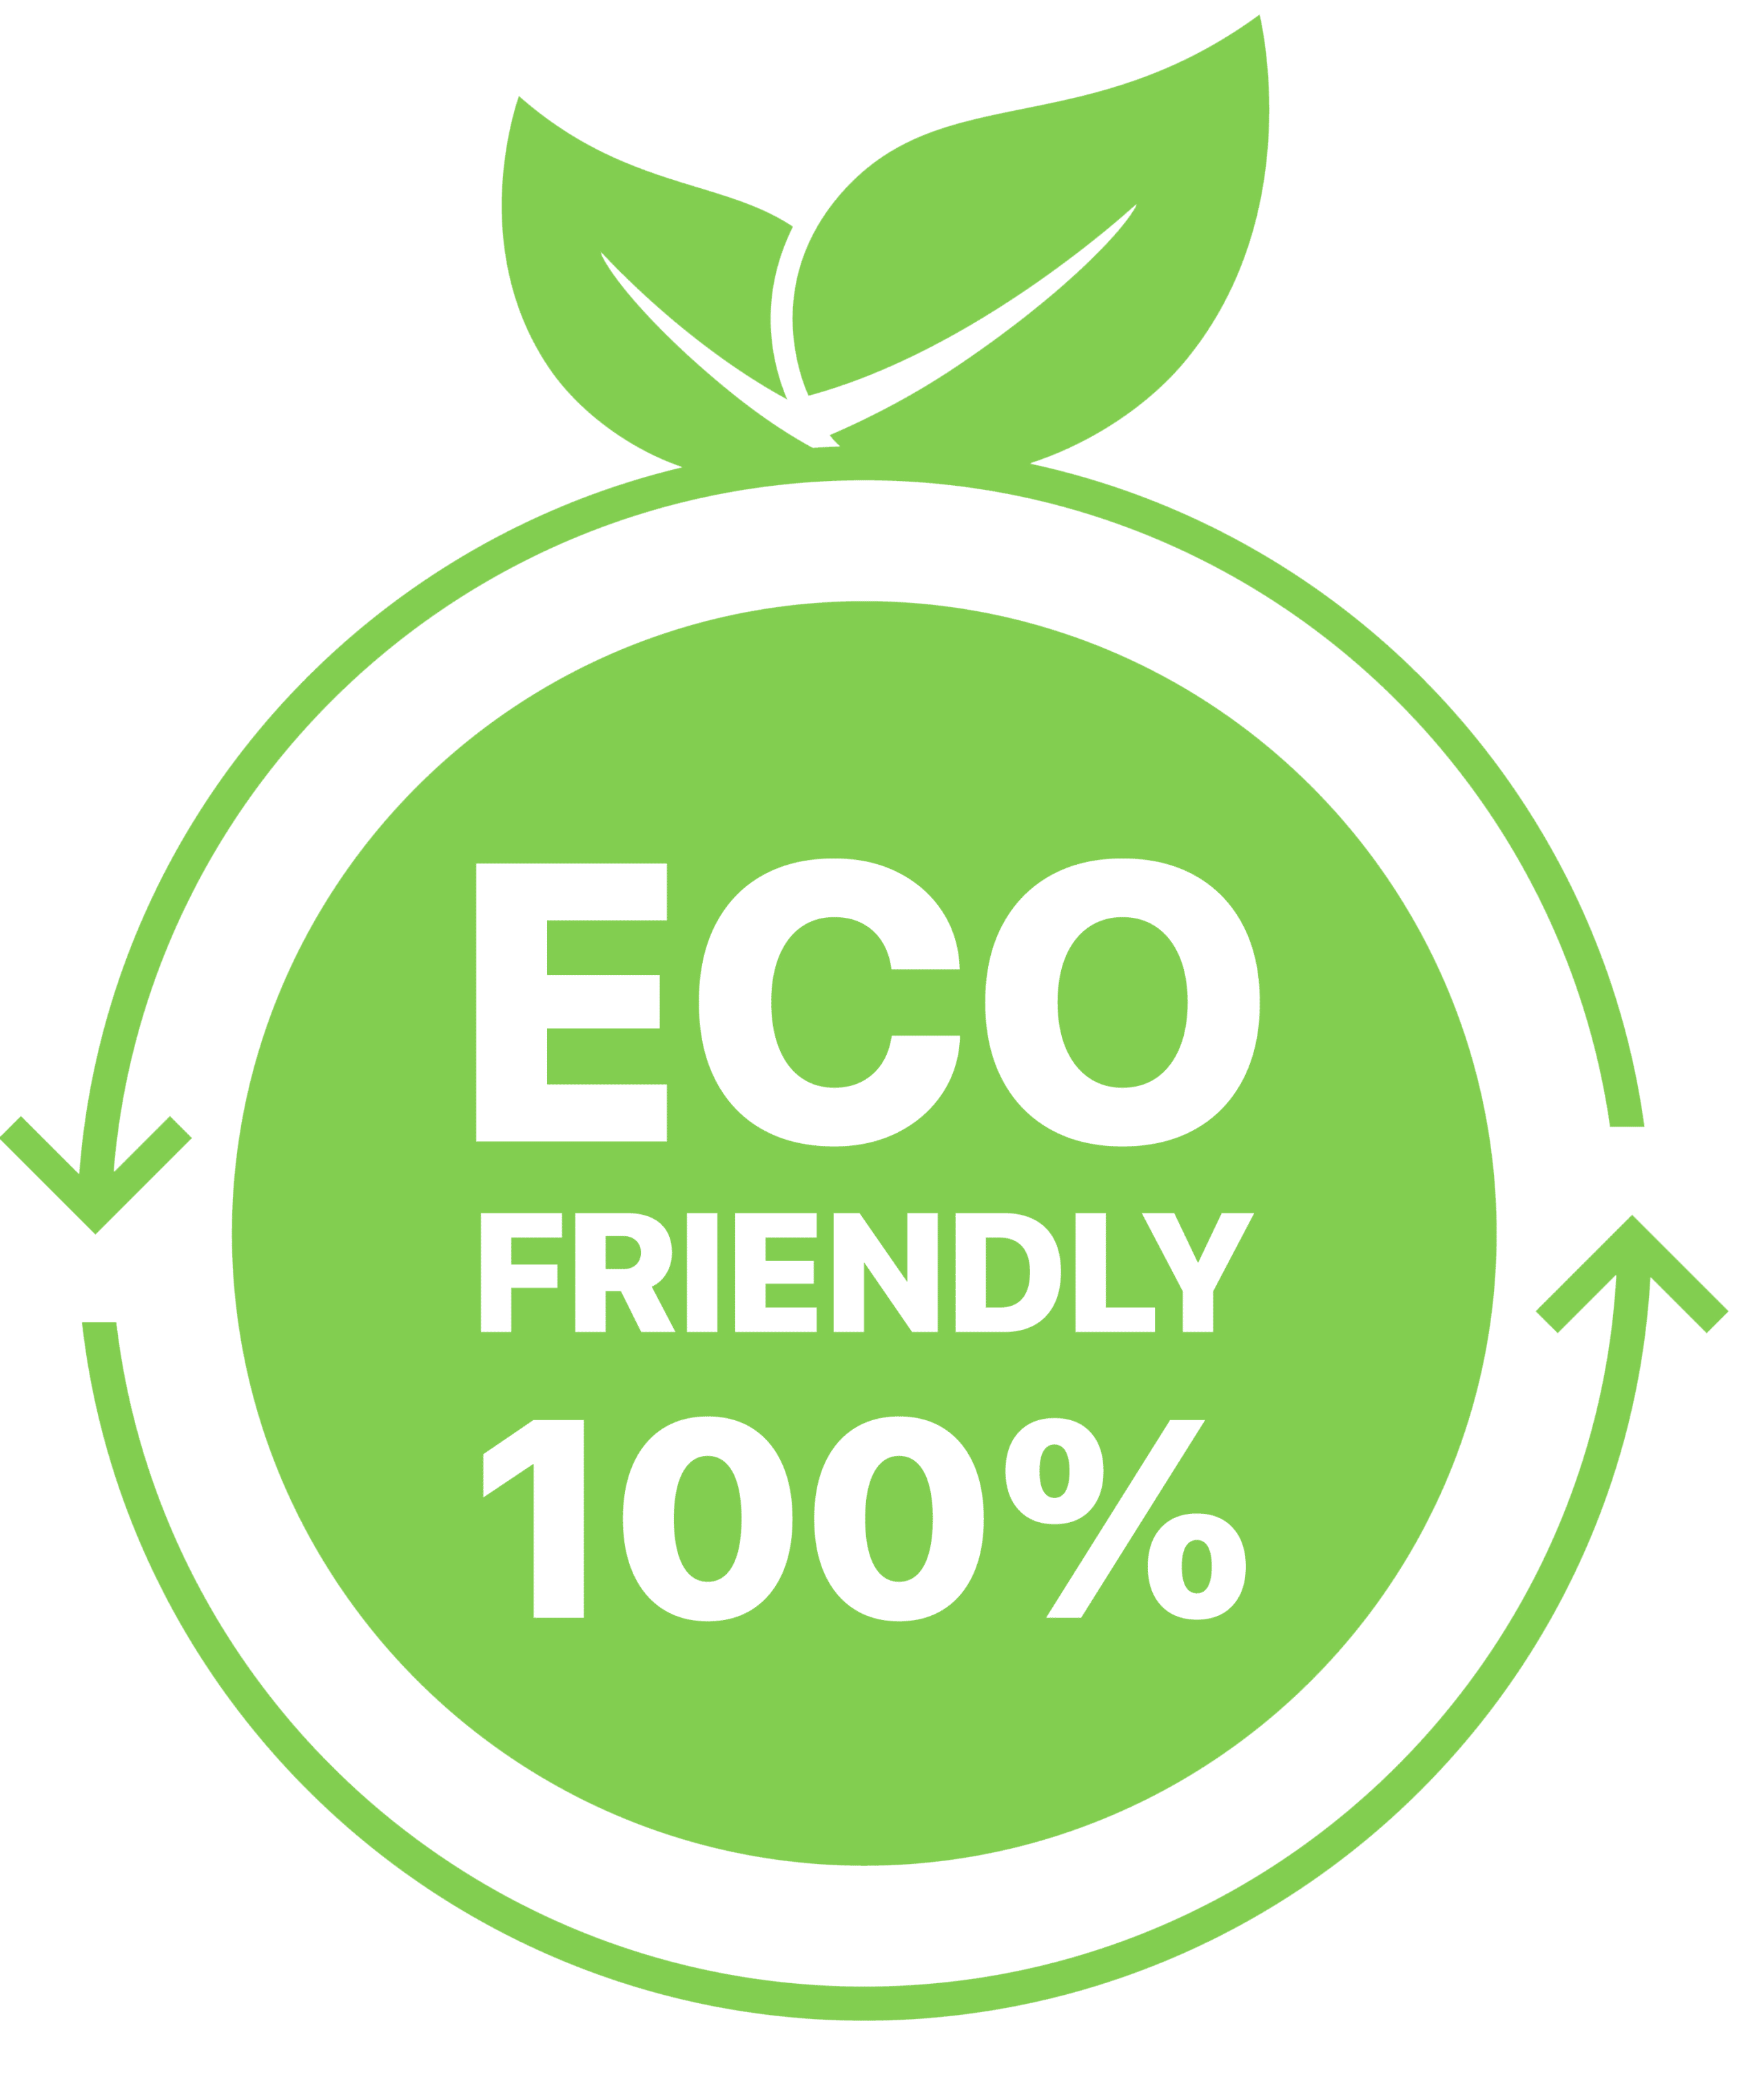 Top Team HVAC is an Eco Friendly company